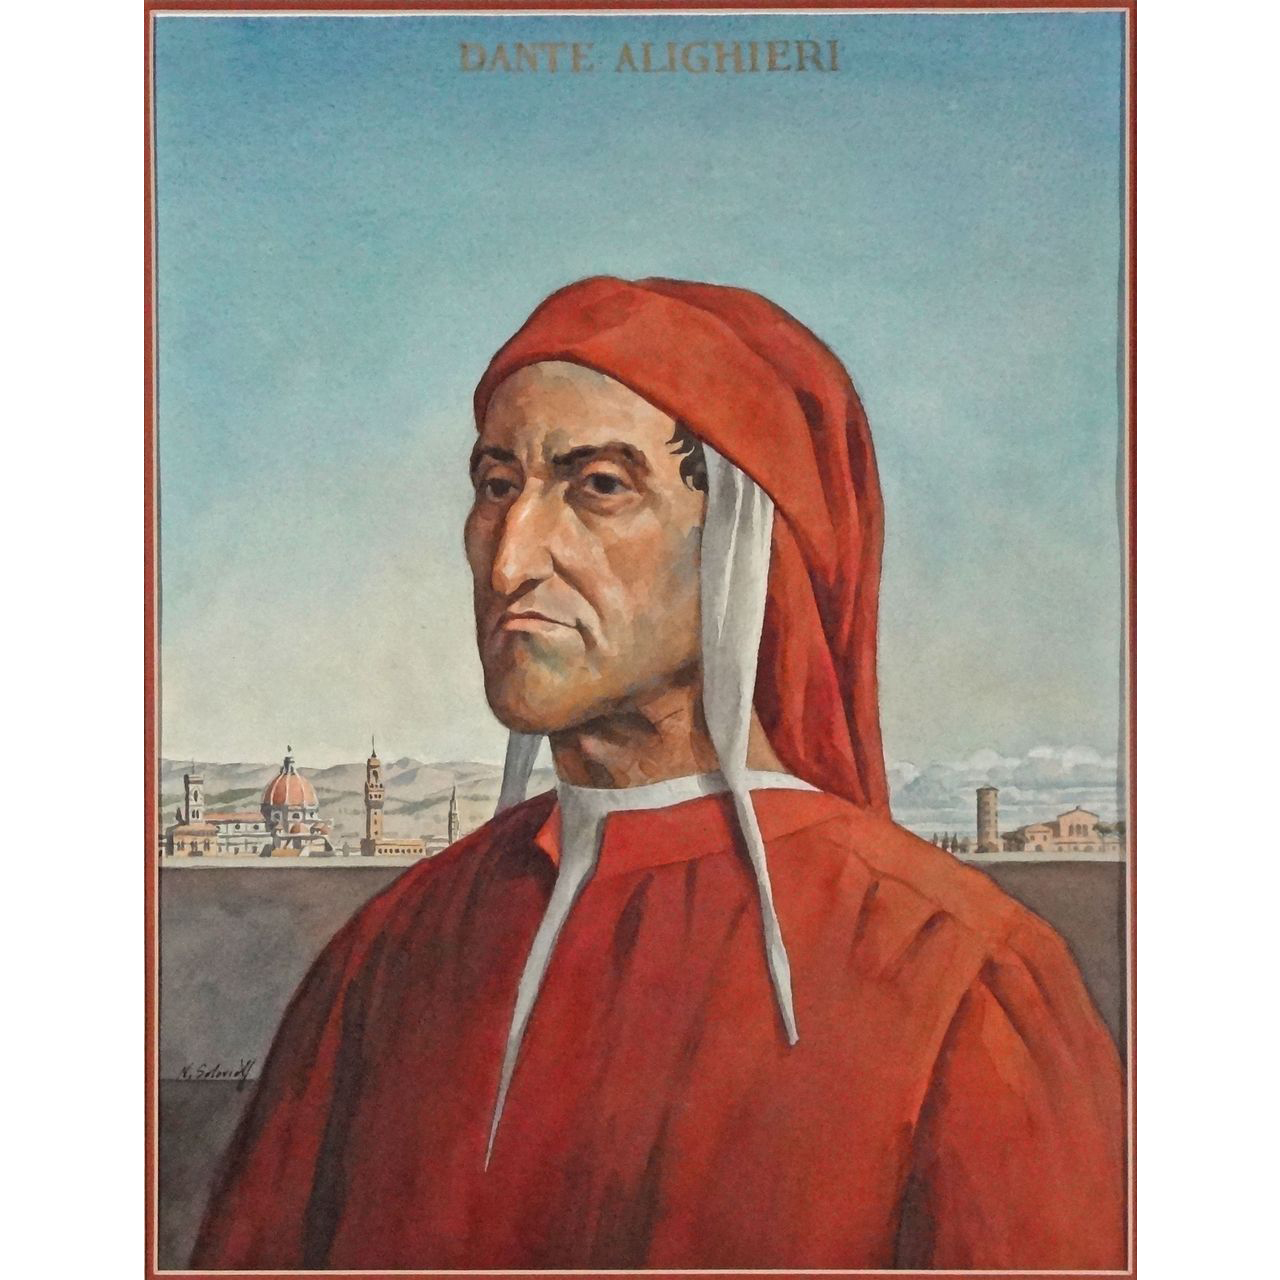 Данте Алигьери. Данте алигьерипортрнт. Сандро Боттичелли портрет Данте. Поэт Данте Алигьери. Данте эпоха возрождения